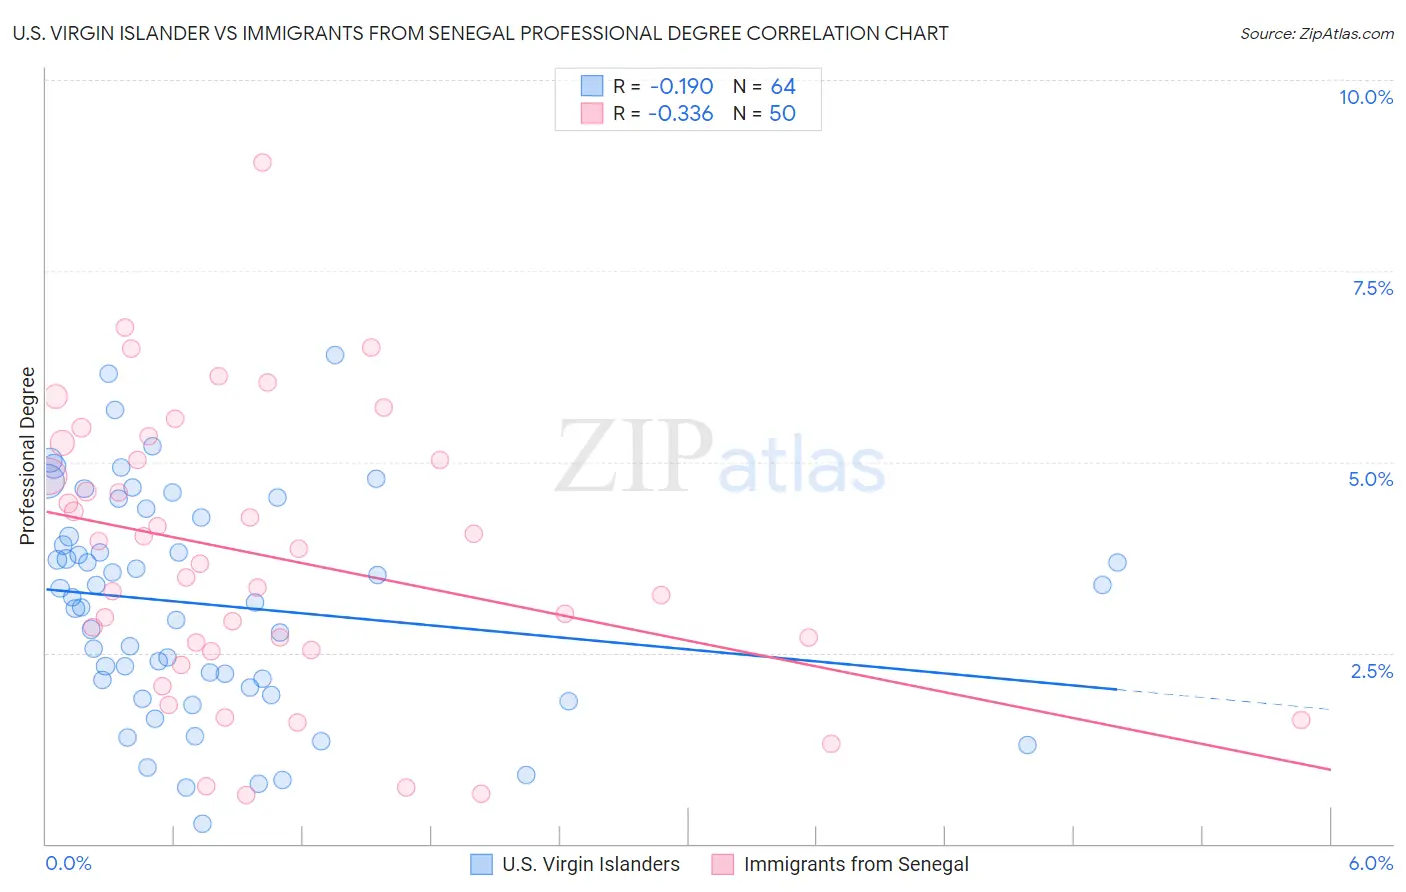 U.S. Virgin Islander vs Immigrants from Senegal Professional Degree